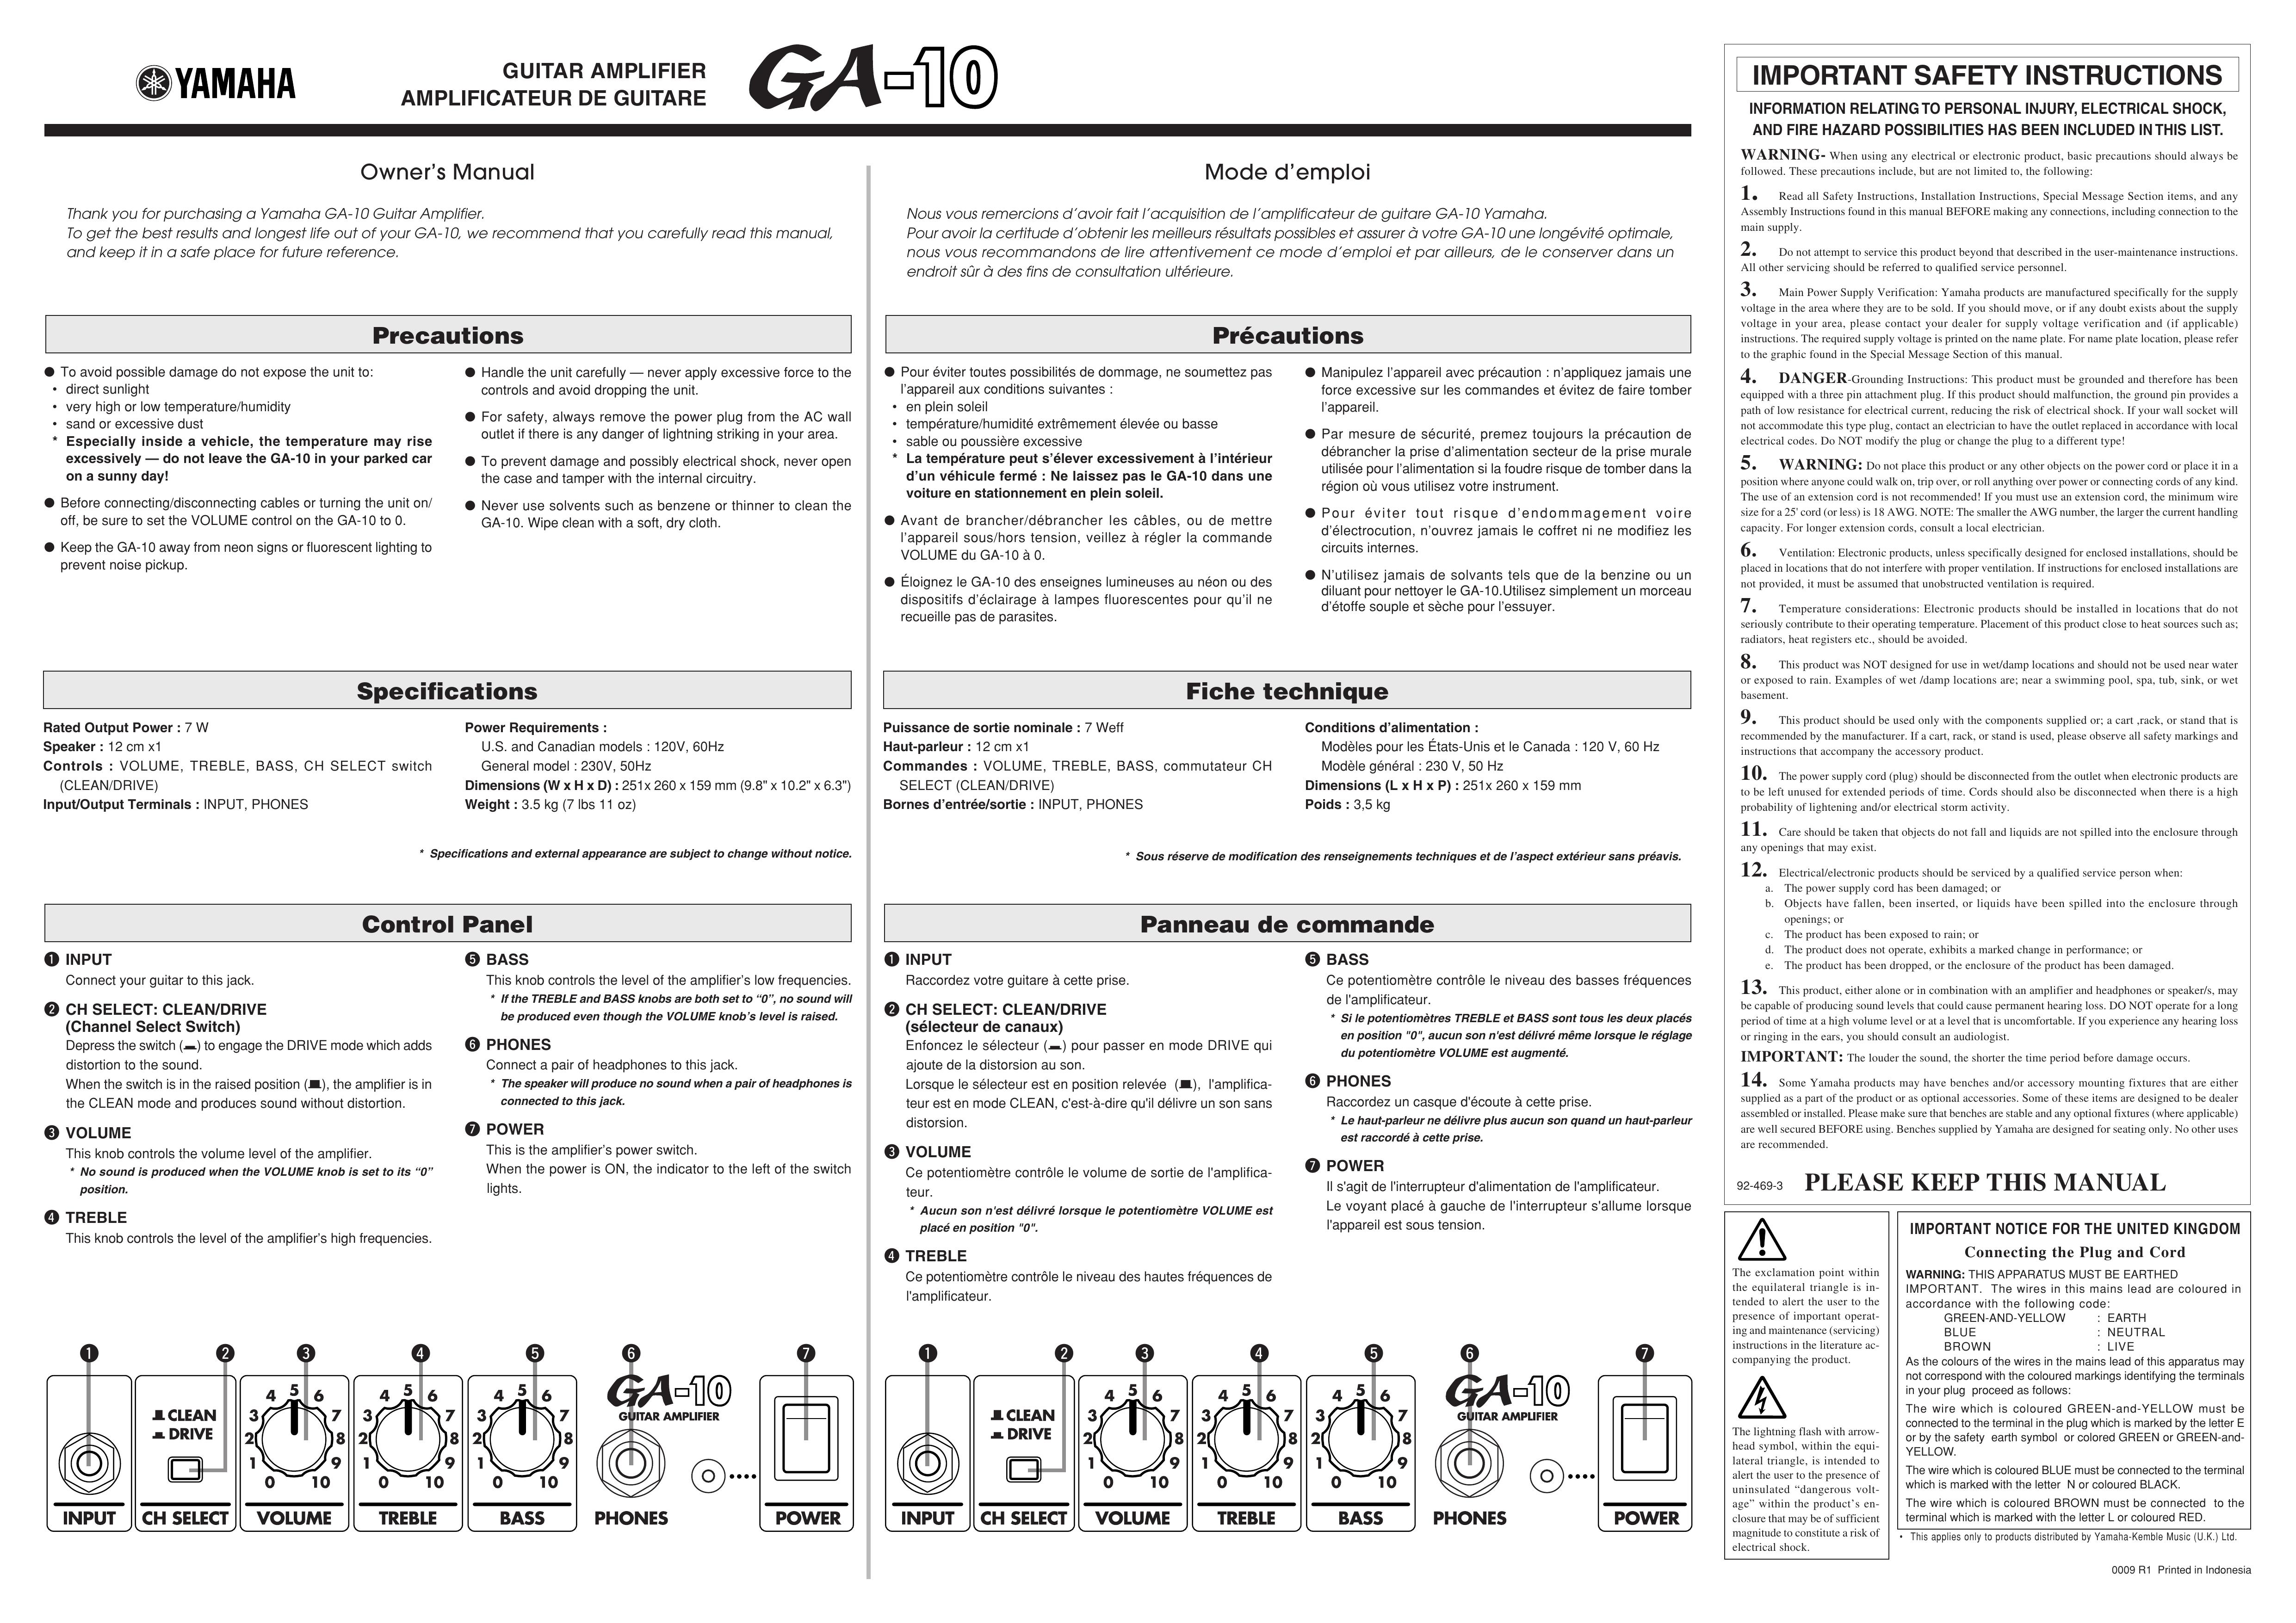 Yamaha GA-10 Musical Instrument Amplifier User Manual